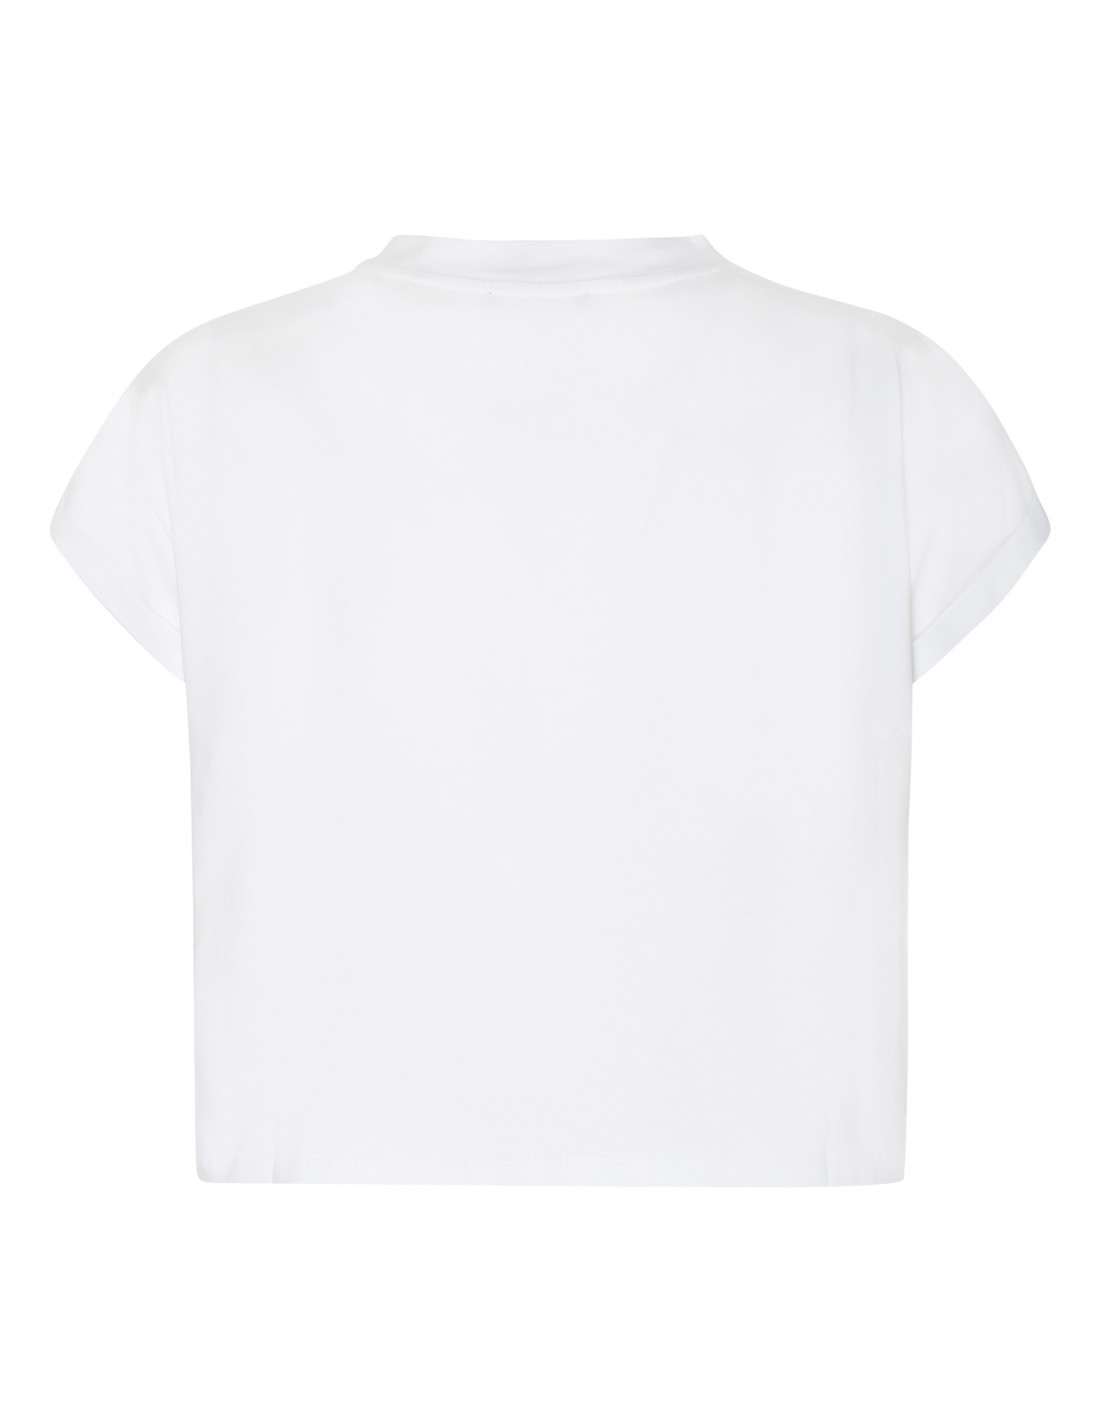 Logo print white T-shirt